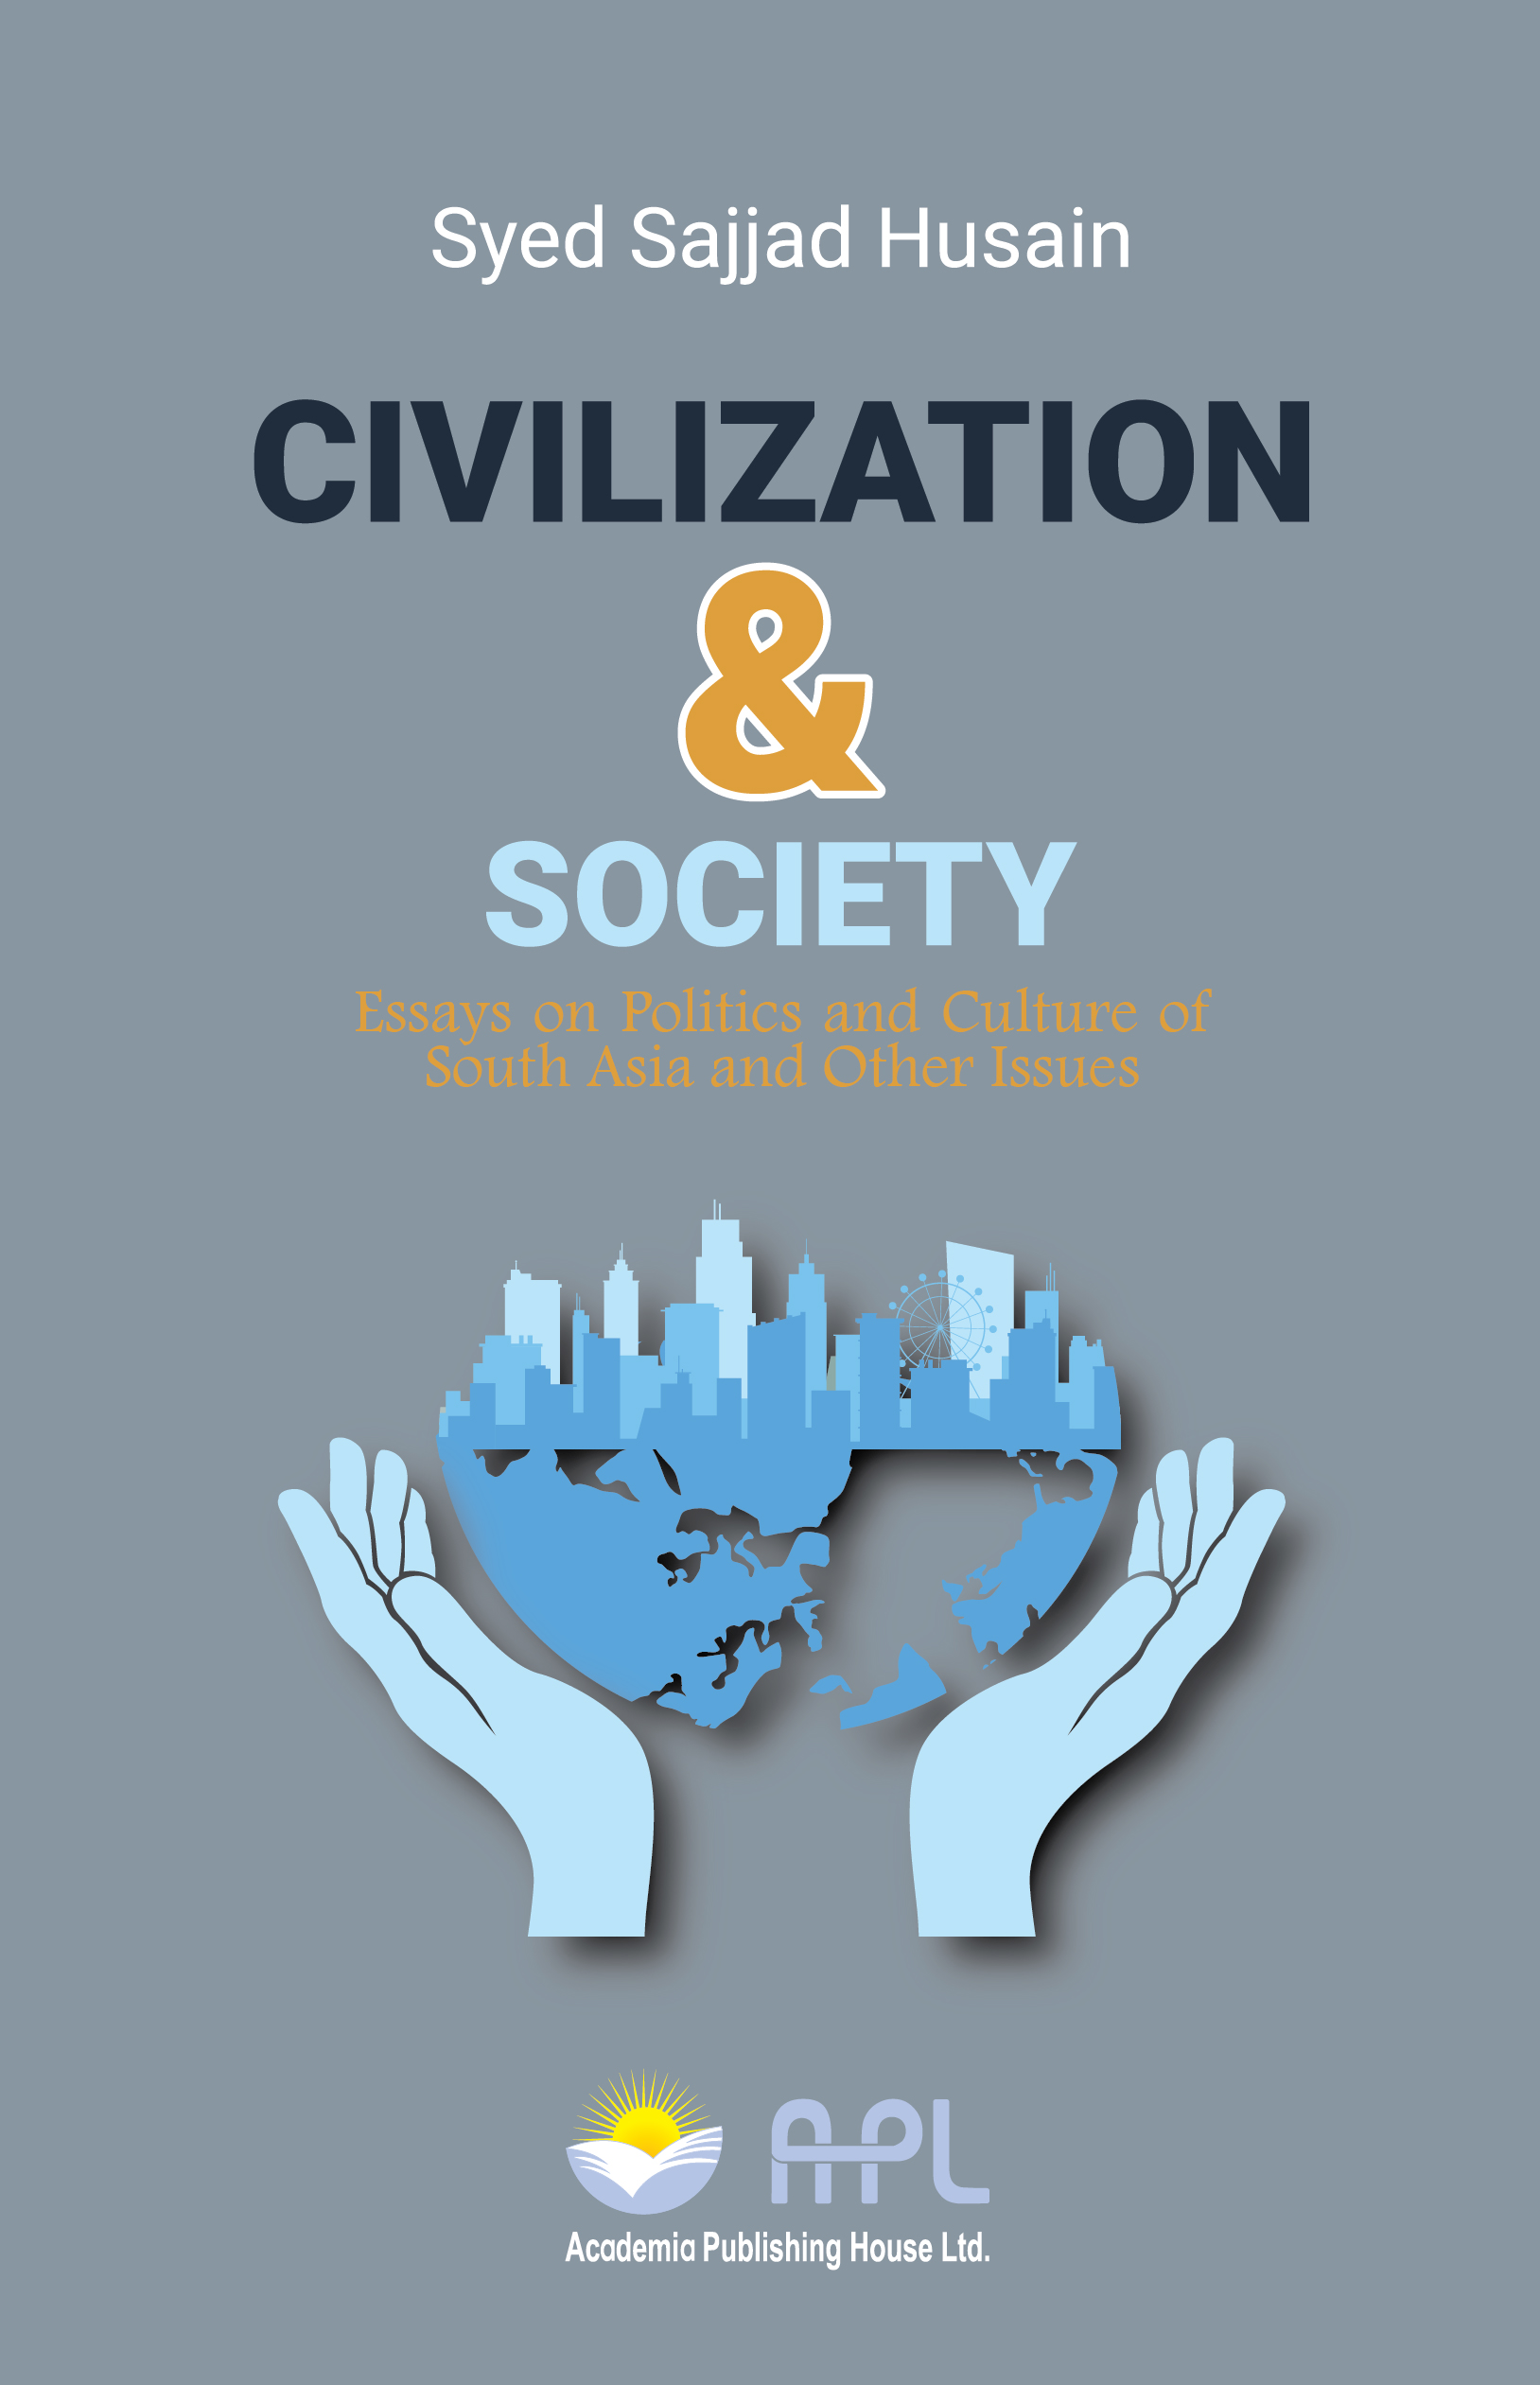 Civilization & Society